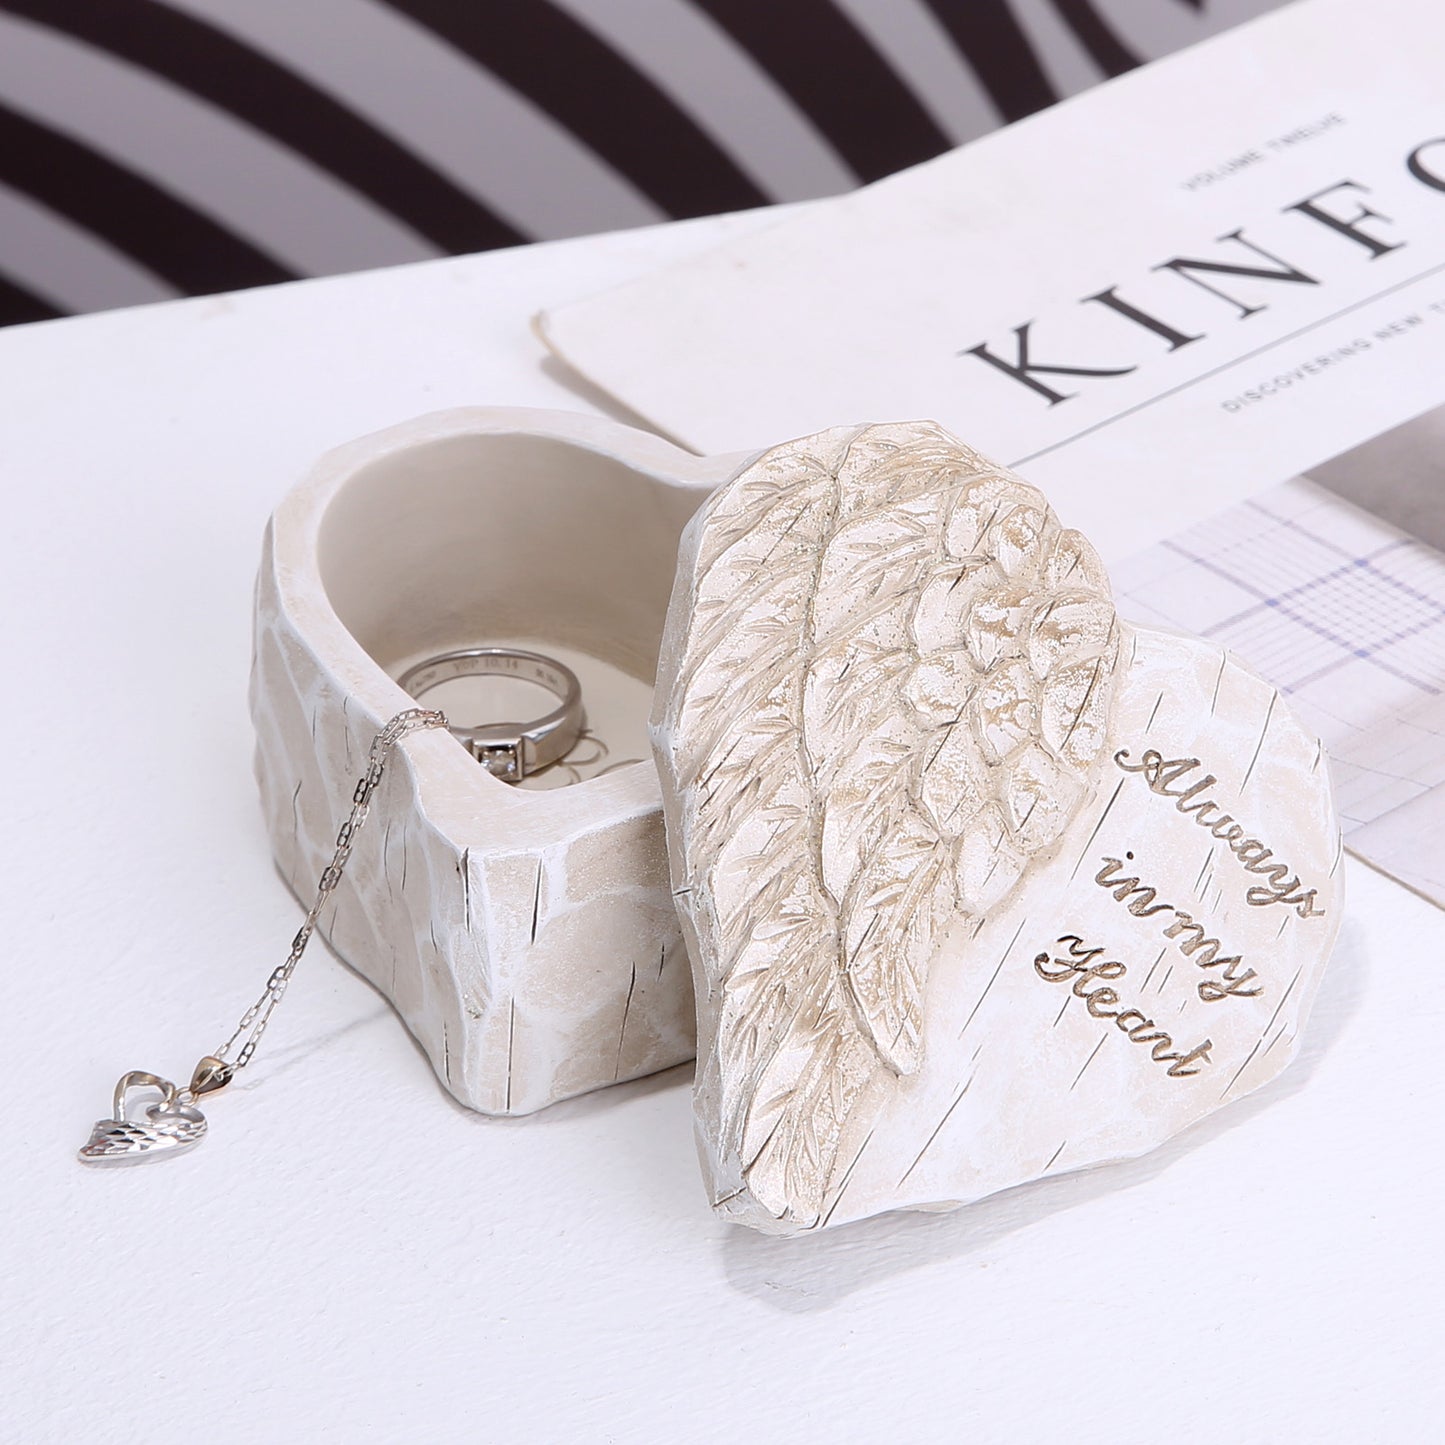 Hodao Decorative Jewelry Wing Keepsake Box